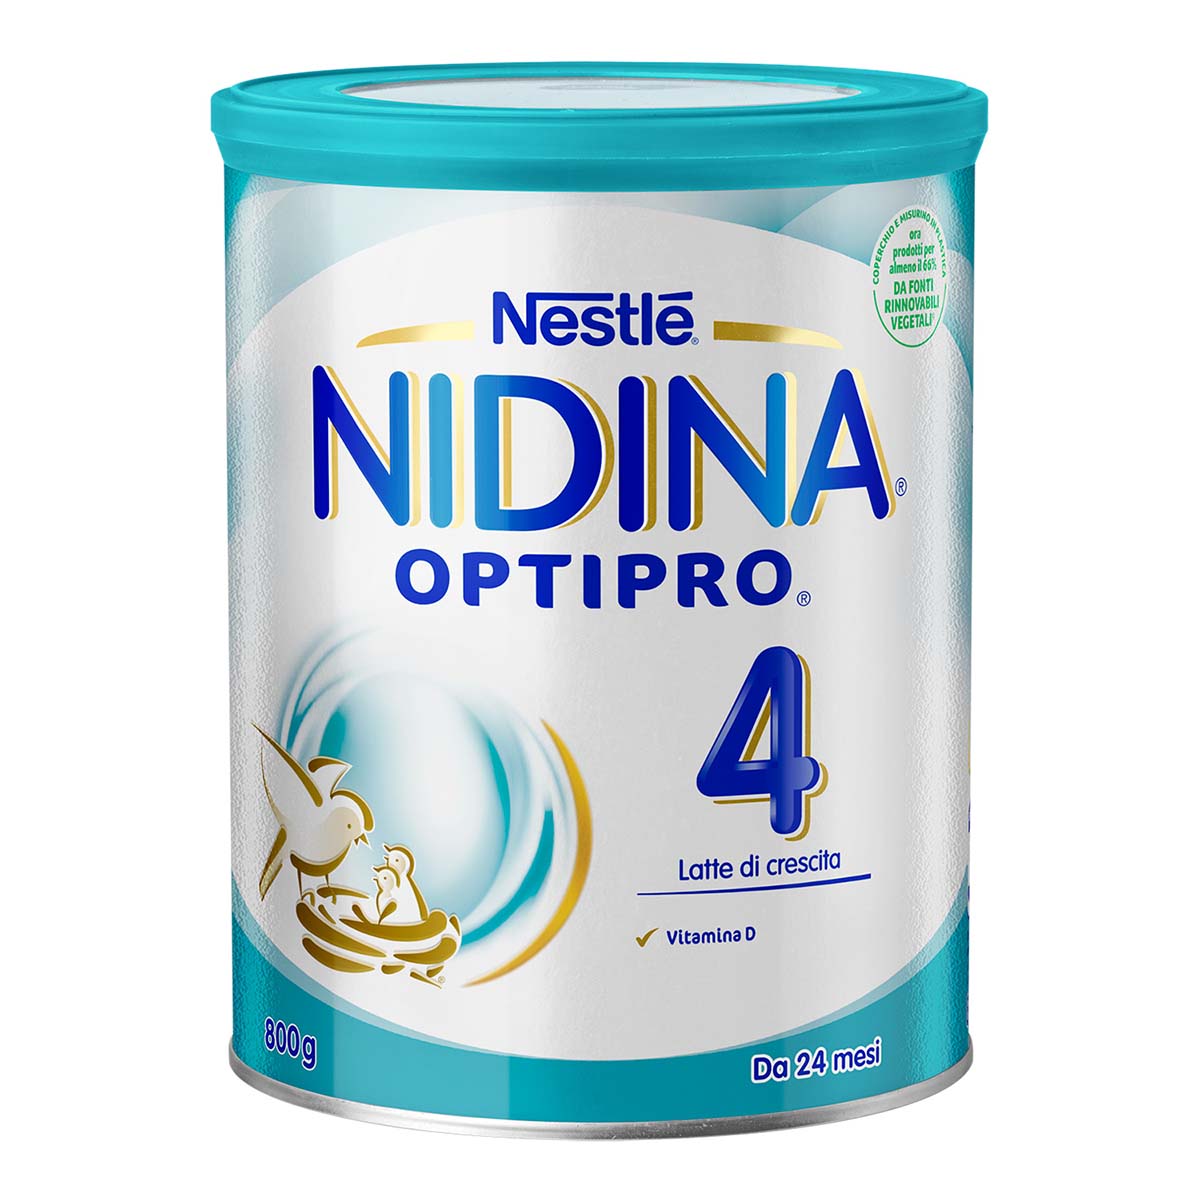 Nestlé NIDINA OPTIPRO 4 800g,  Latte di crescita in polvere, dai 24 mesi